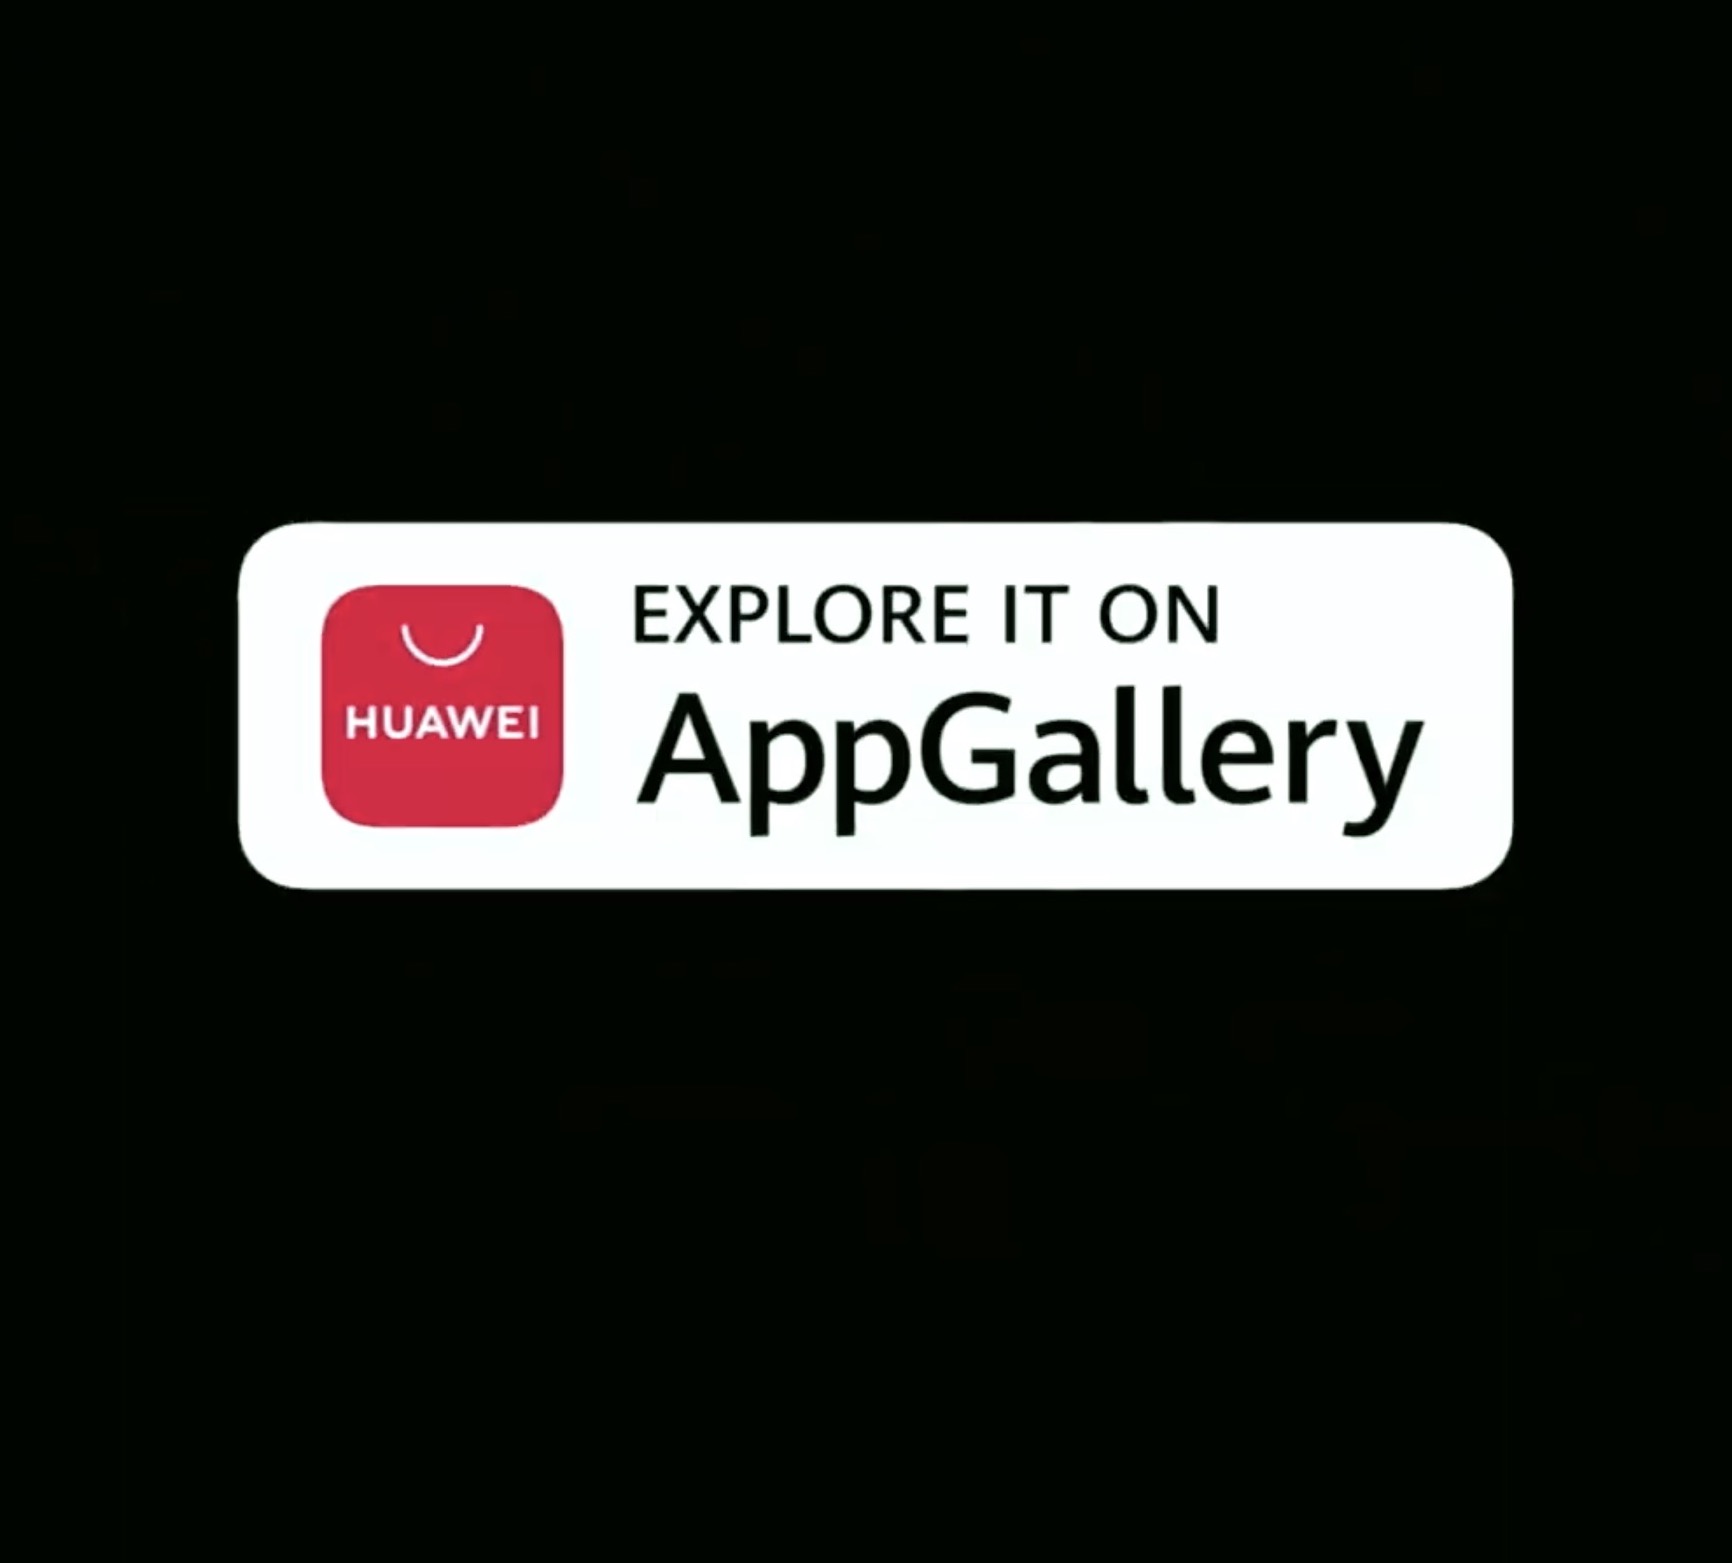 Https appgallery huawei ru. Логотип Huawei app Gallery. Откройте в app Gallery. App Gallery кнопка. Откройте в app Gallery logo.